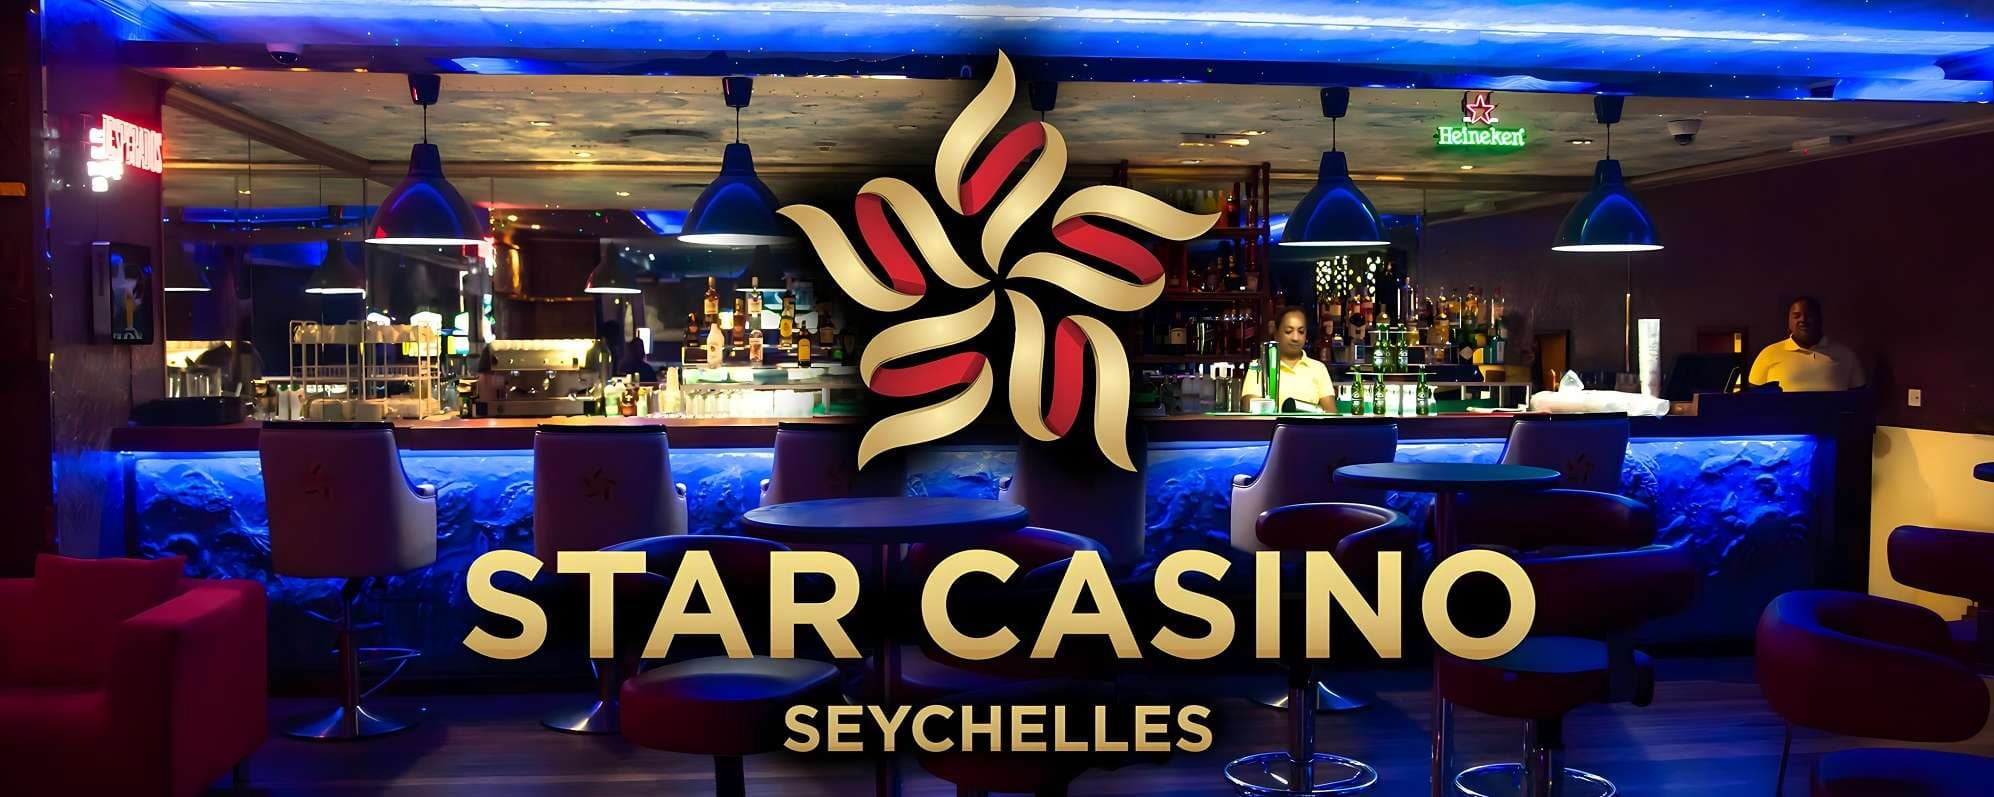 Star Casino Seychelles